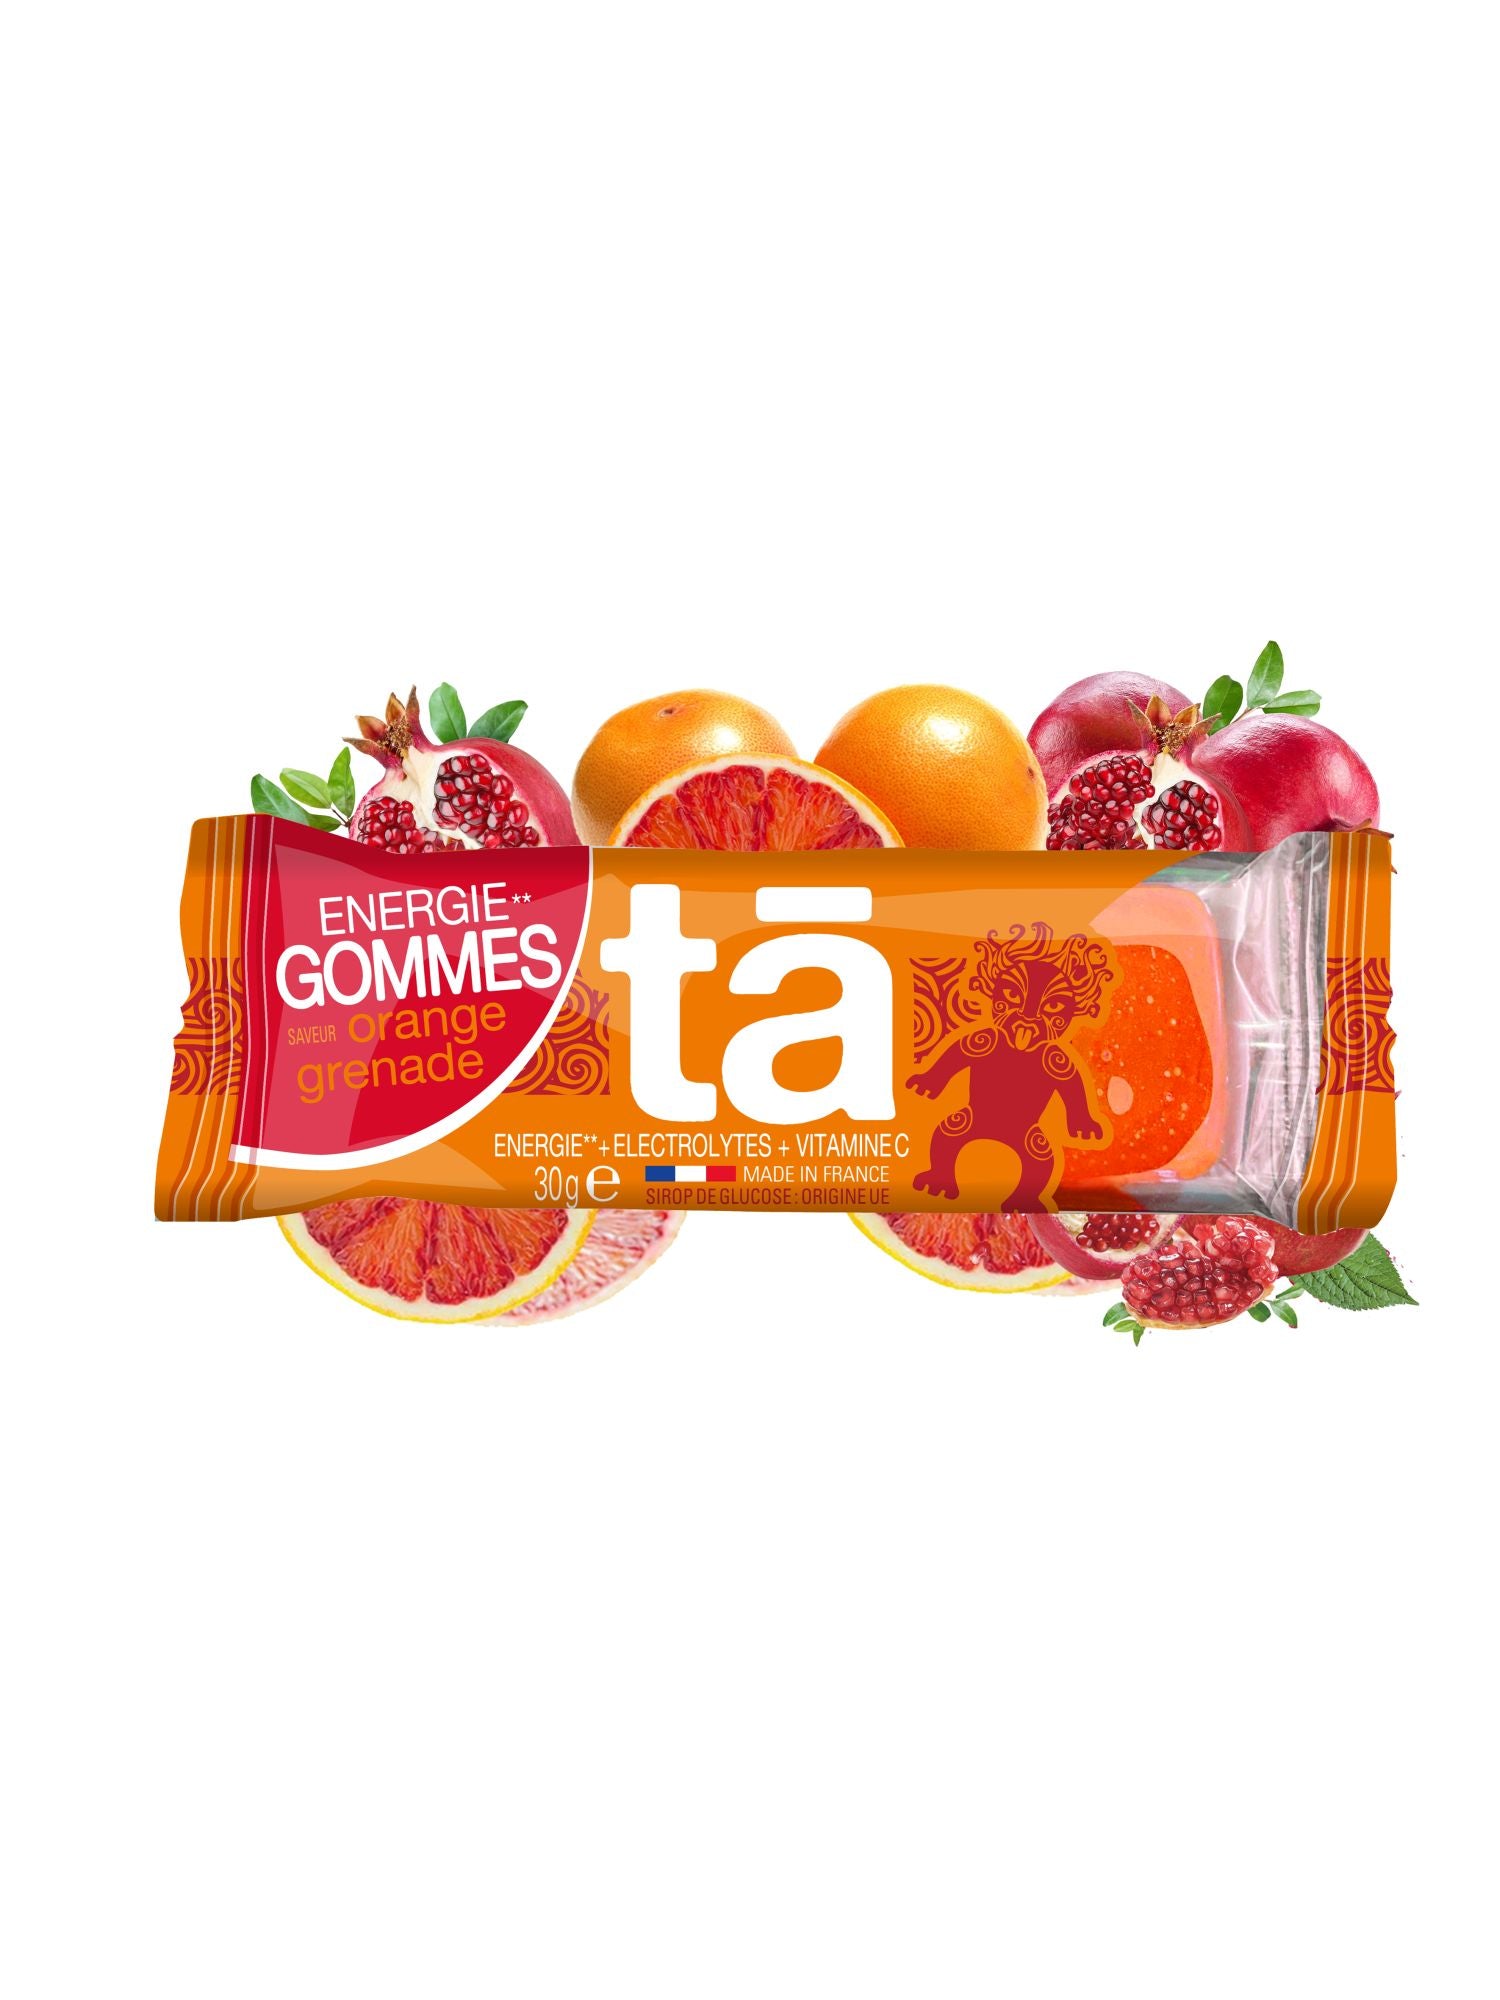 Energy Gummies - Blood Orange Pomegranate (contains caffeine)